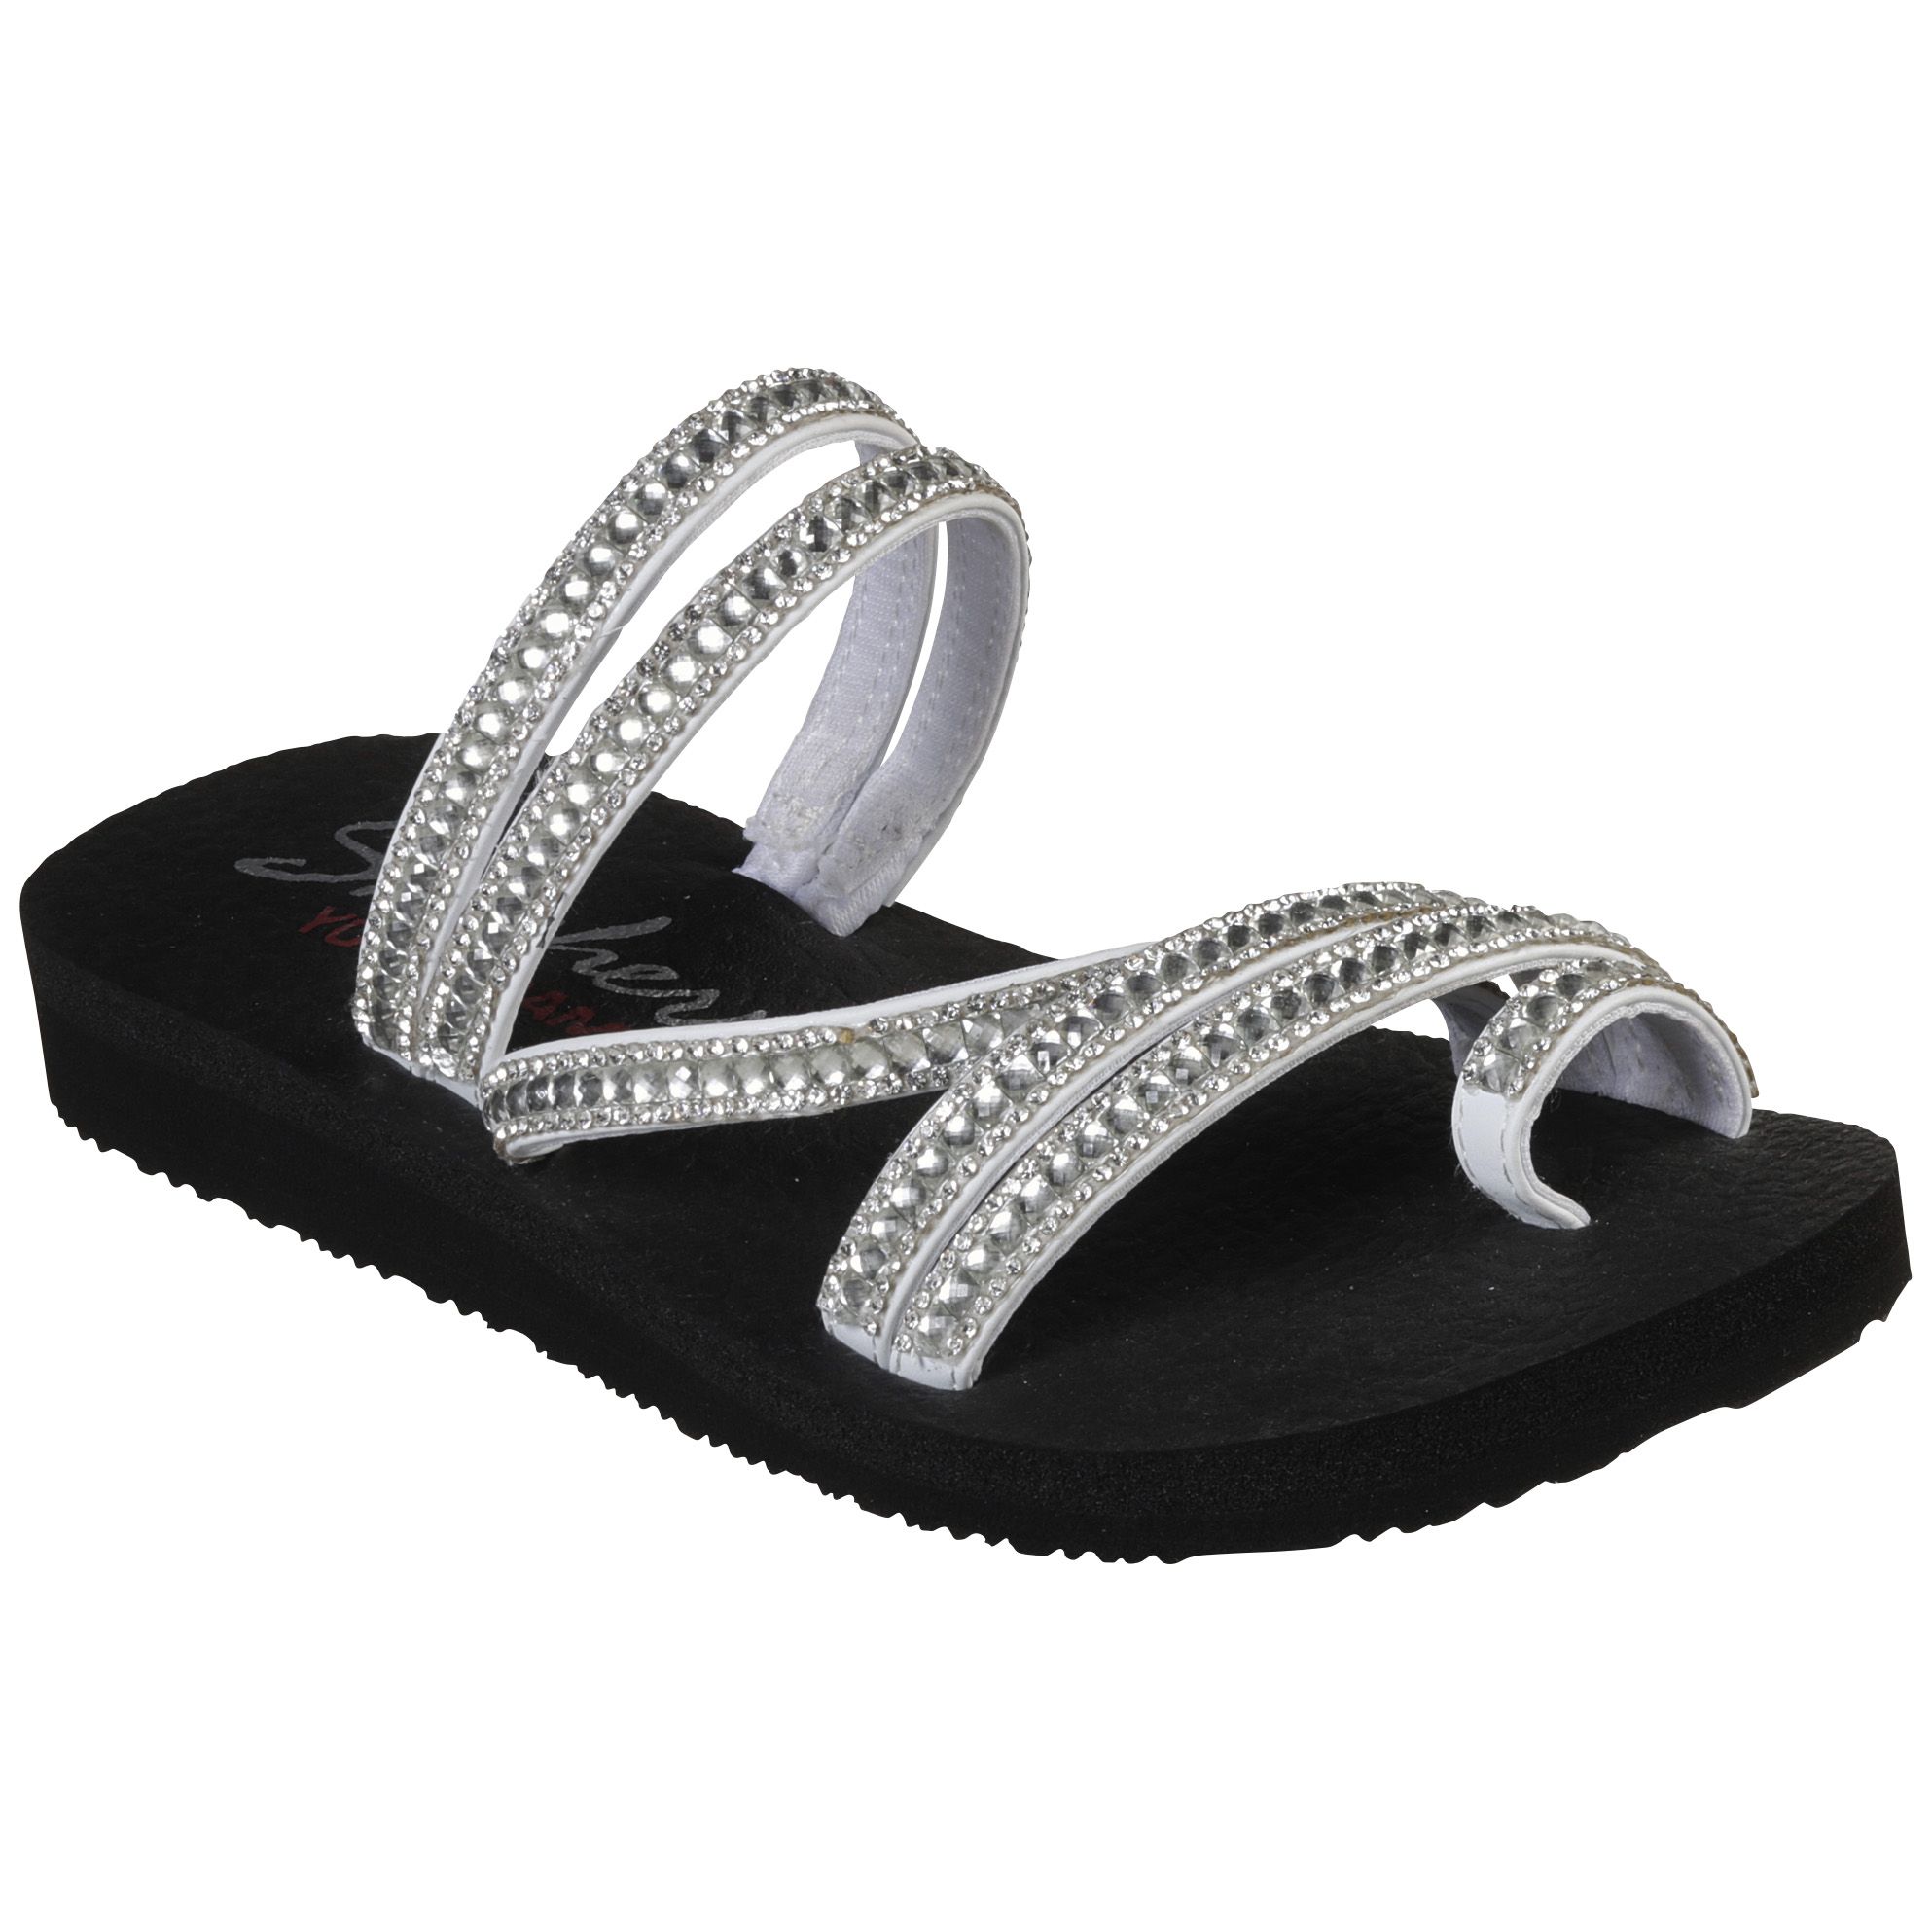 Sketchers Yoga Foam Sandals - Black & White with Silver Embellishment